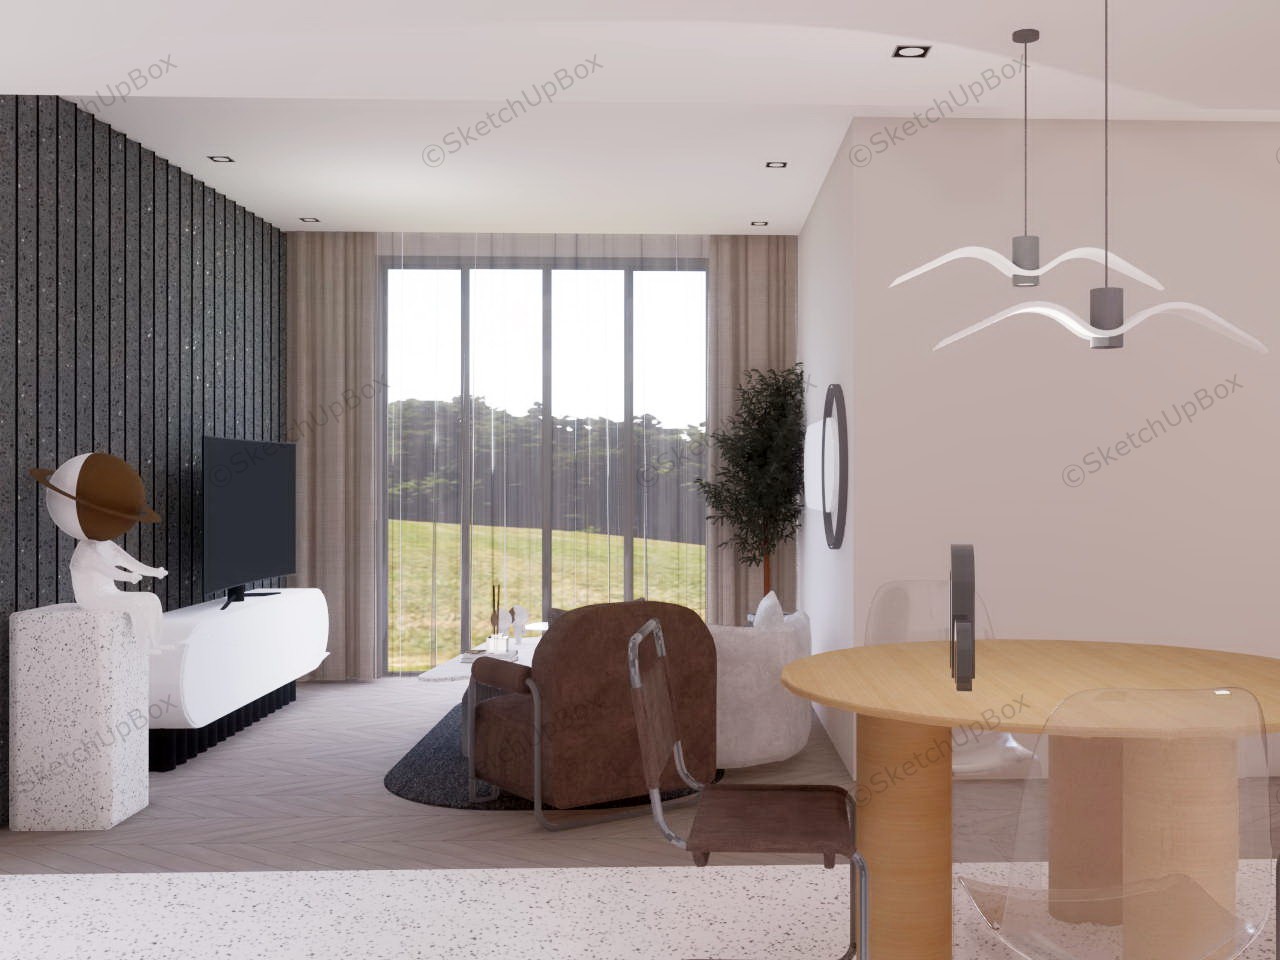 Small Apartment Living Room Design sketchup model preview - SketchupBox